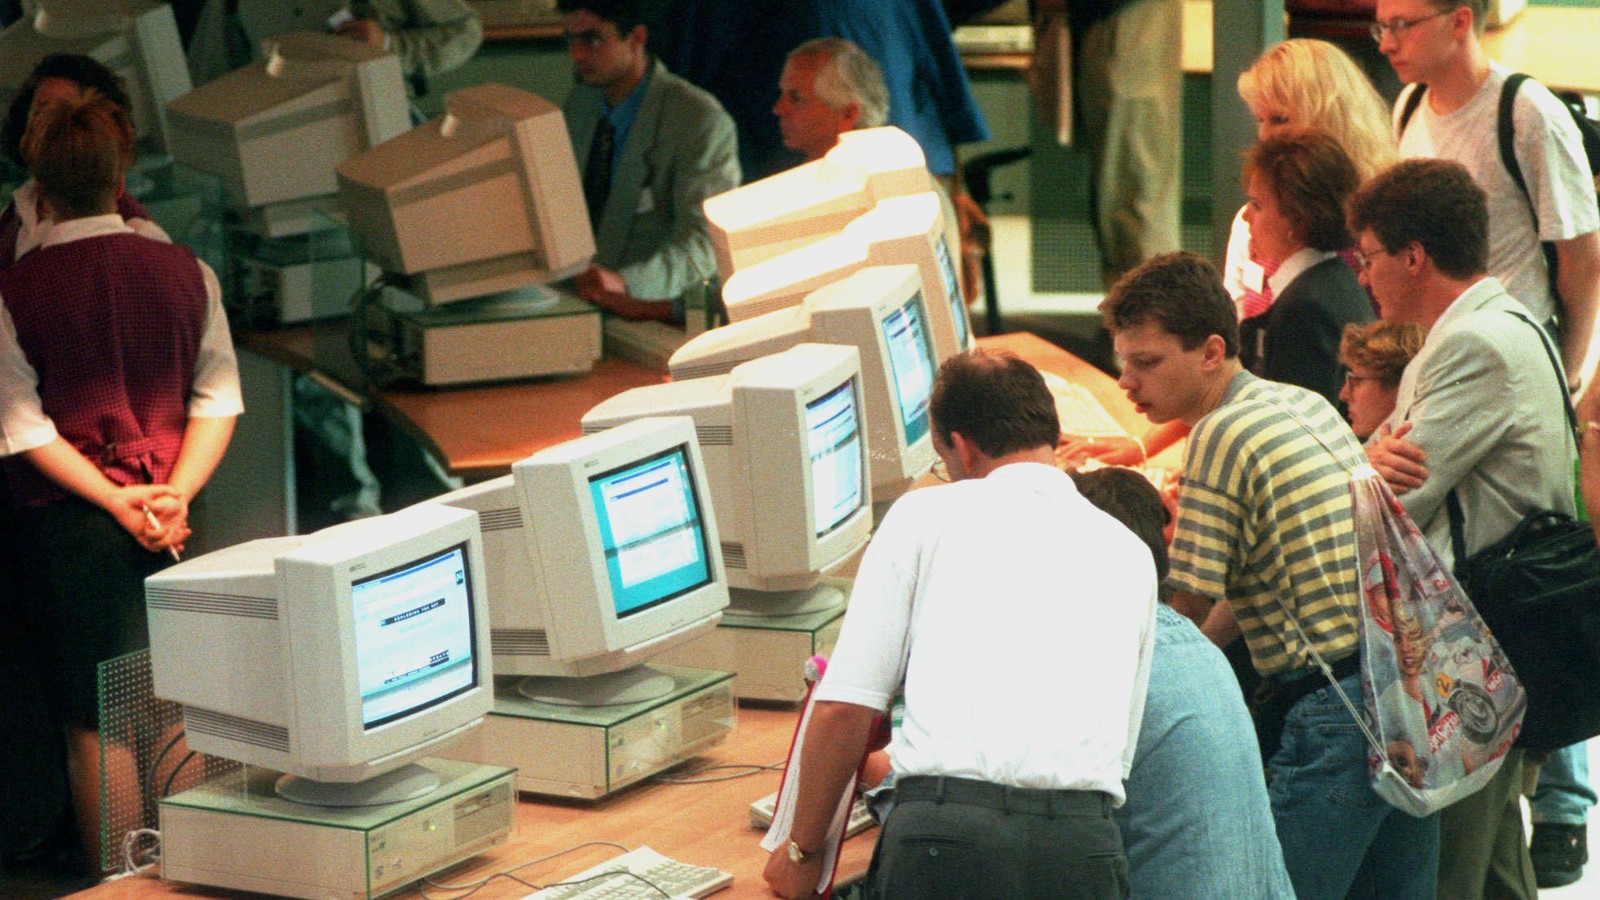 MSN Gaming Zone in 1999 - Web Design Museum